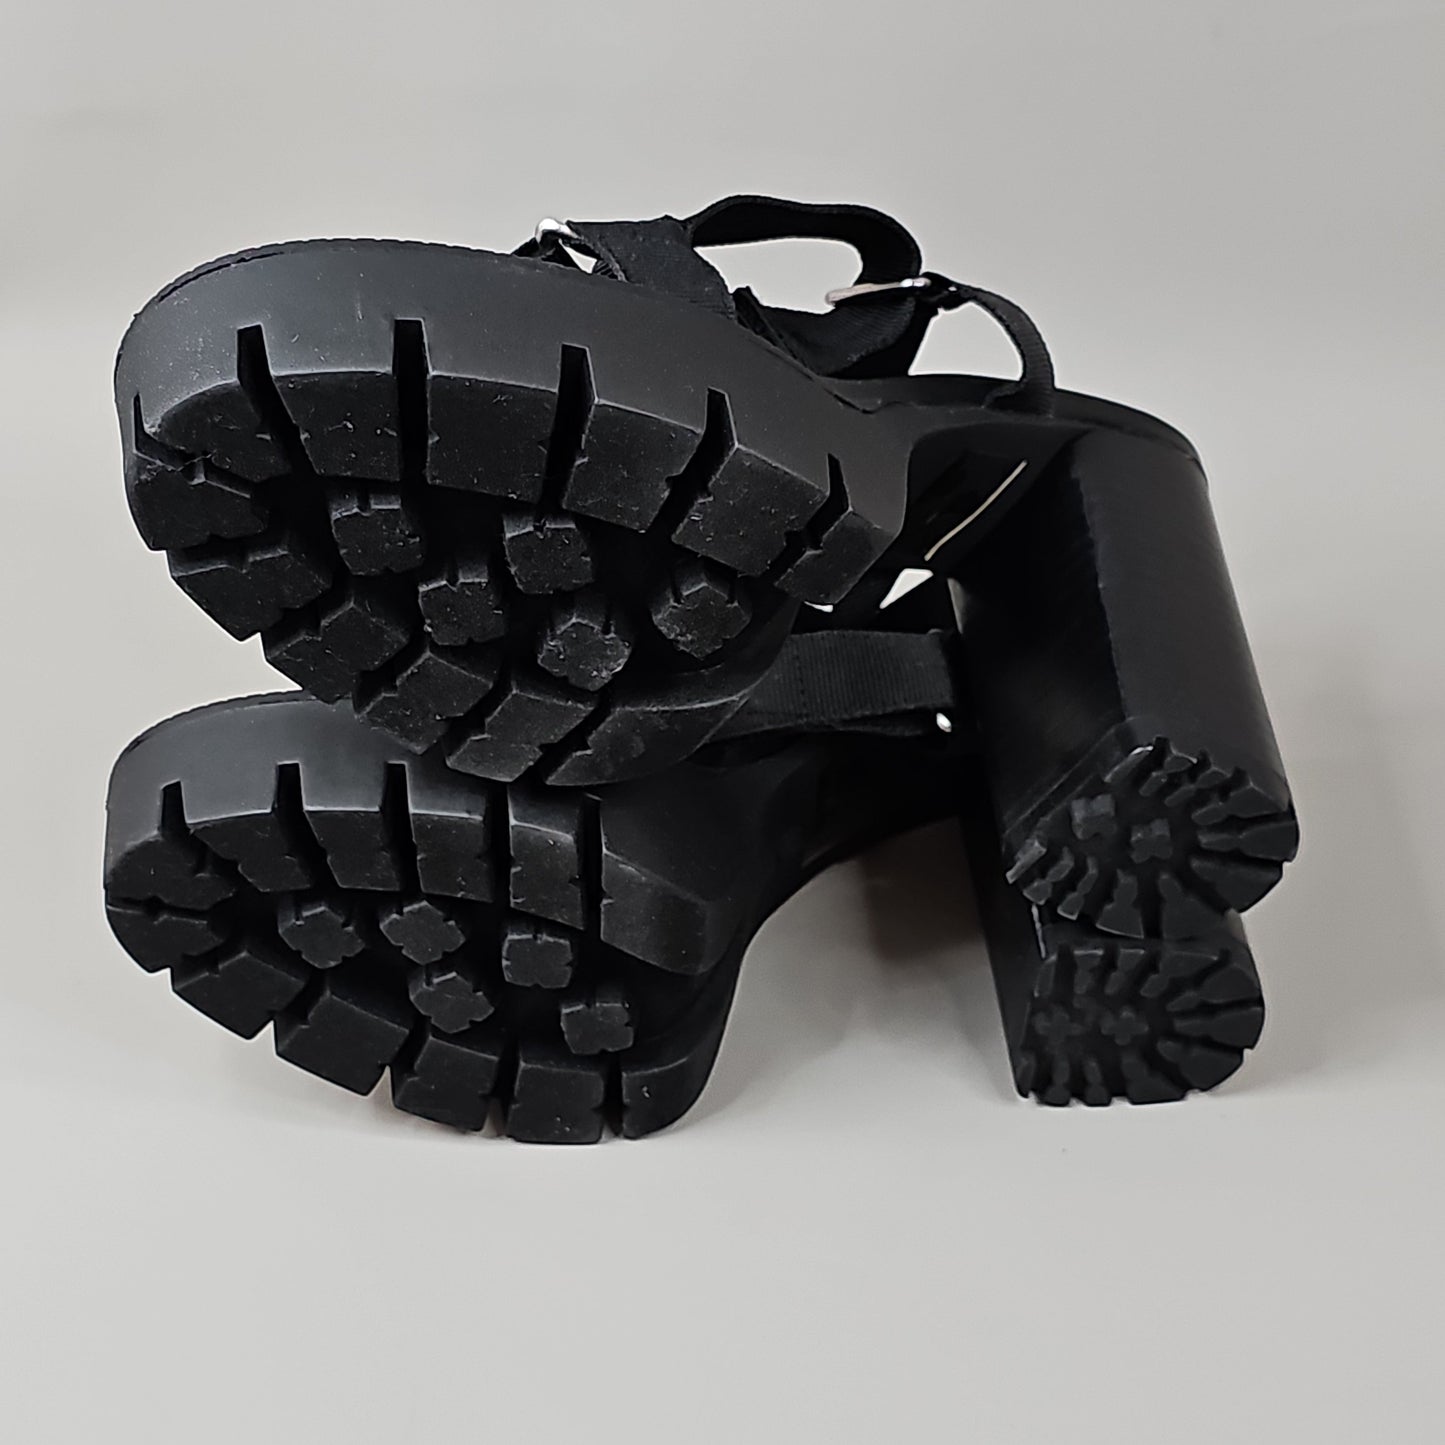 CHARLES BY CHARLES DAVID Women's Vast Sport Sandal Shoe Sz 8.5 M Black (New)